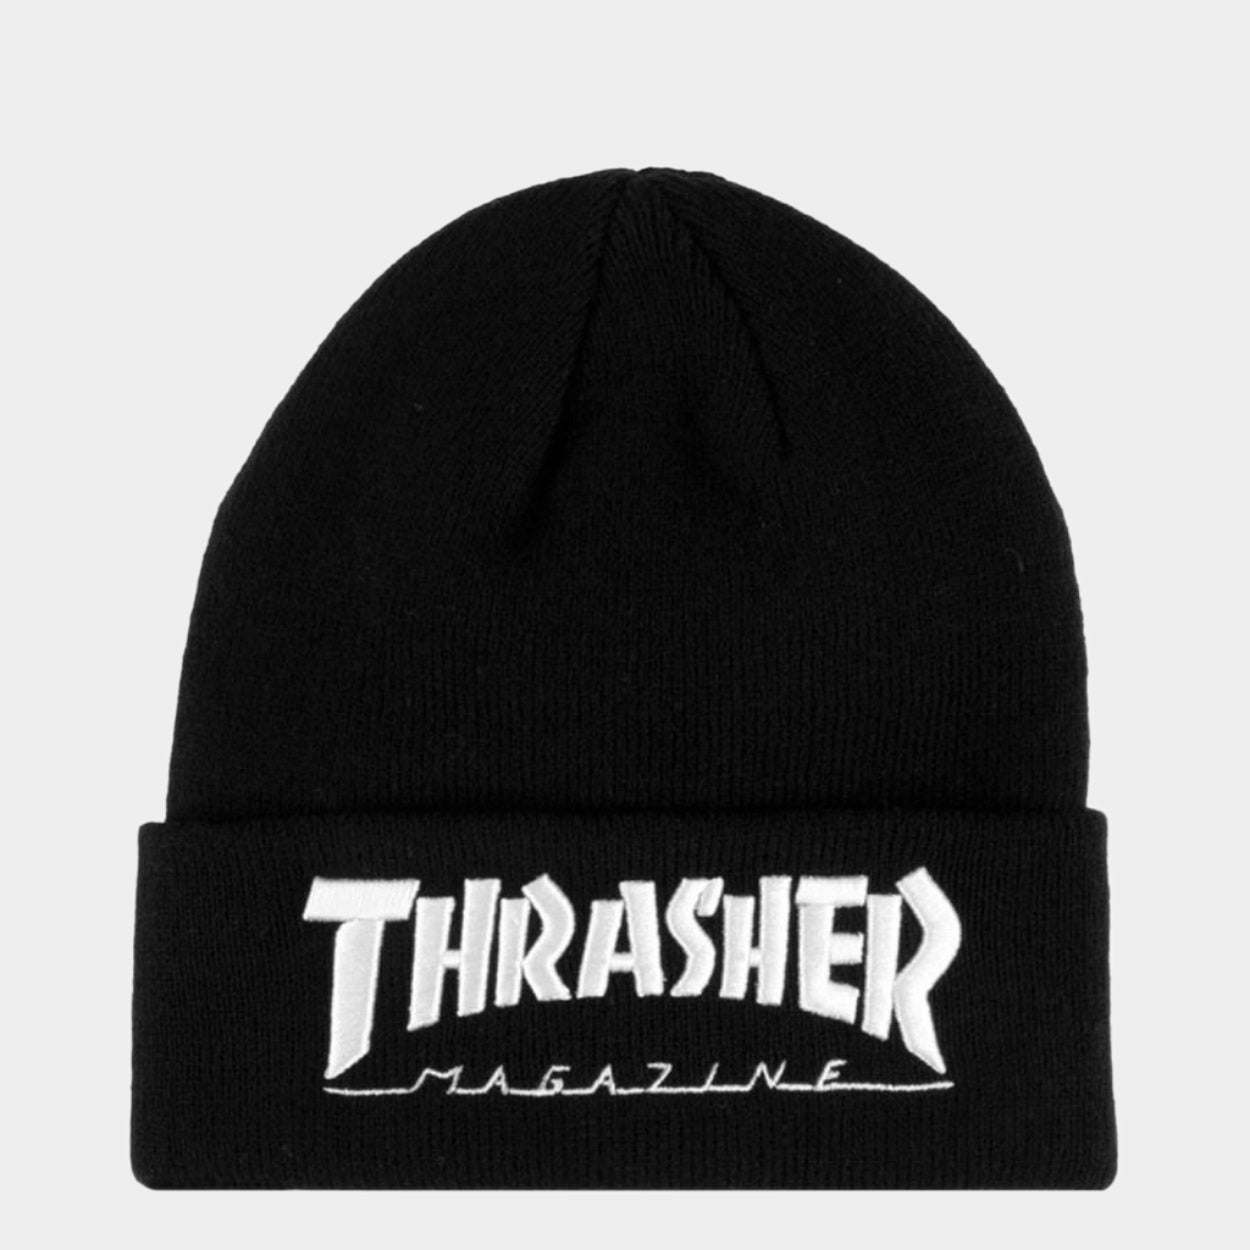 Thrasher Embroidered Logo Beanie - Black / White - Prime Delux Store